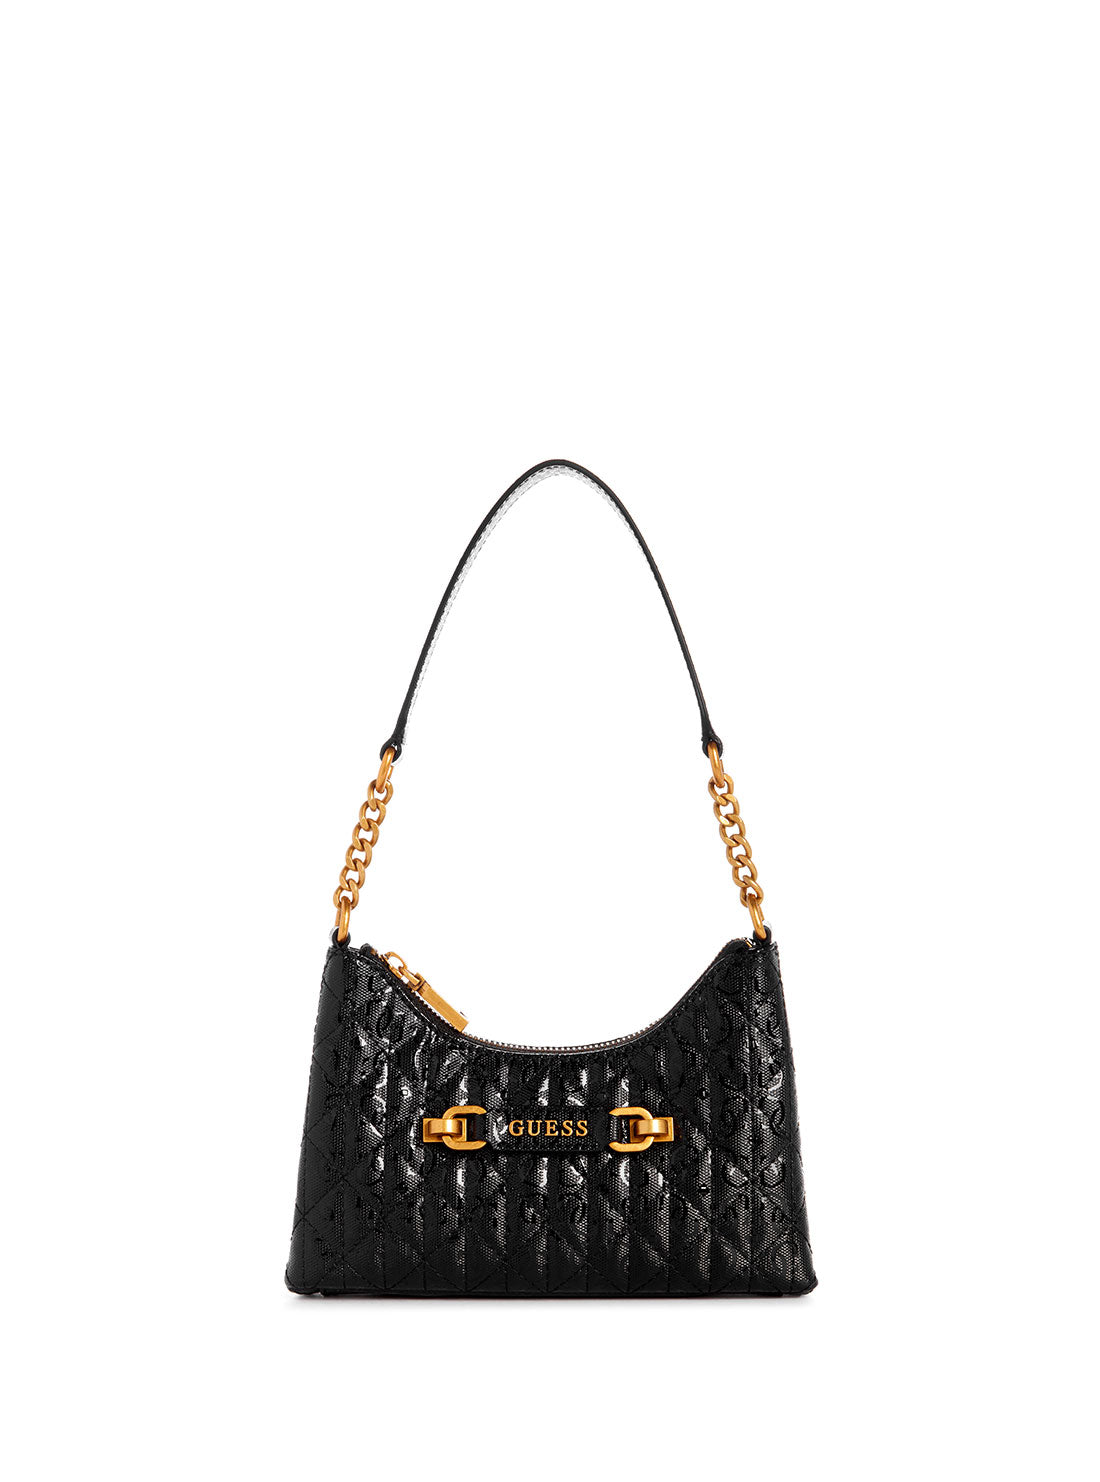 GUESS Women's Black Aveta Mini Shoulder Bag GB898772 Front View